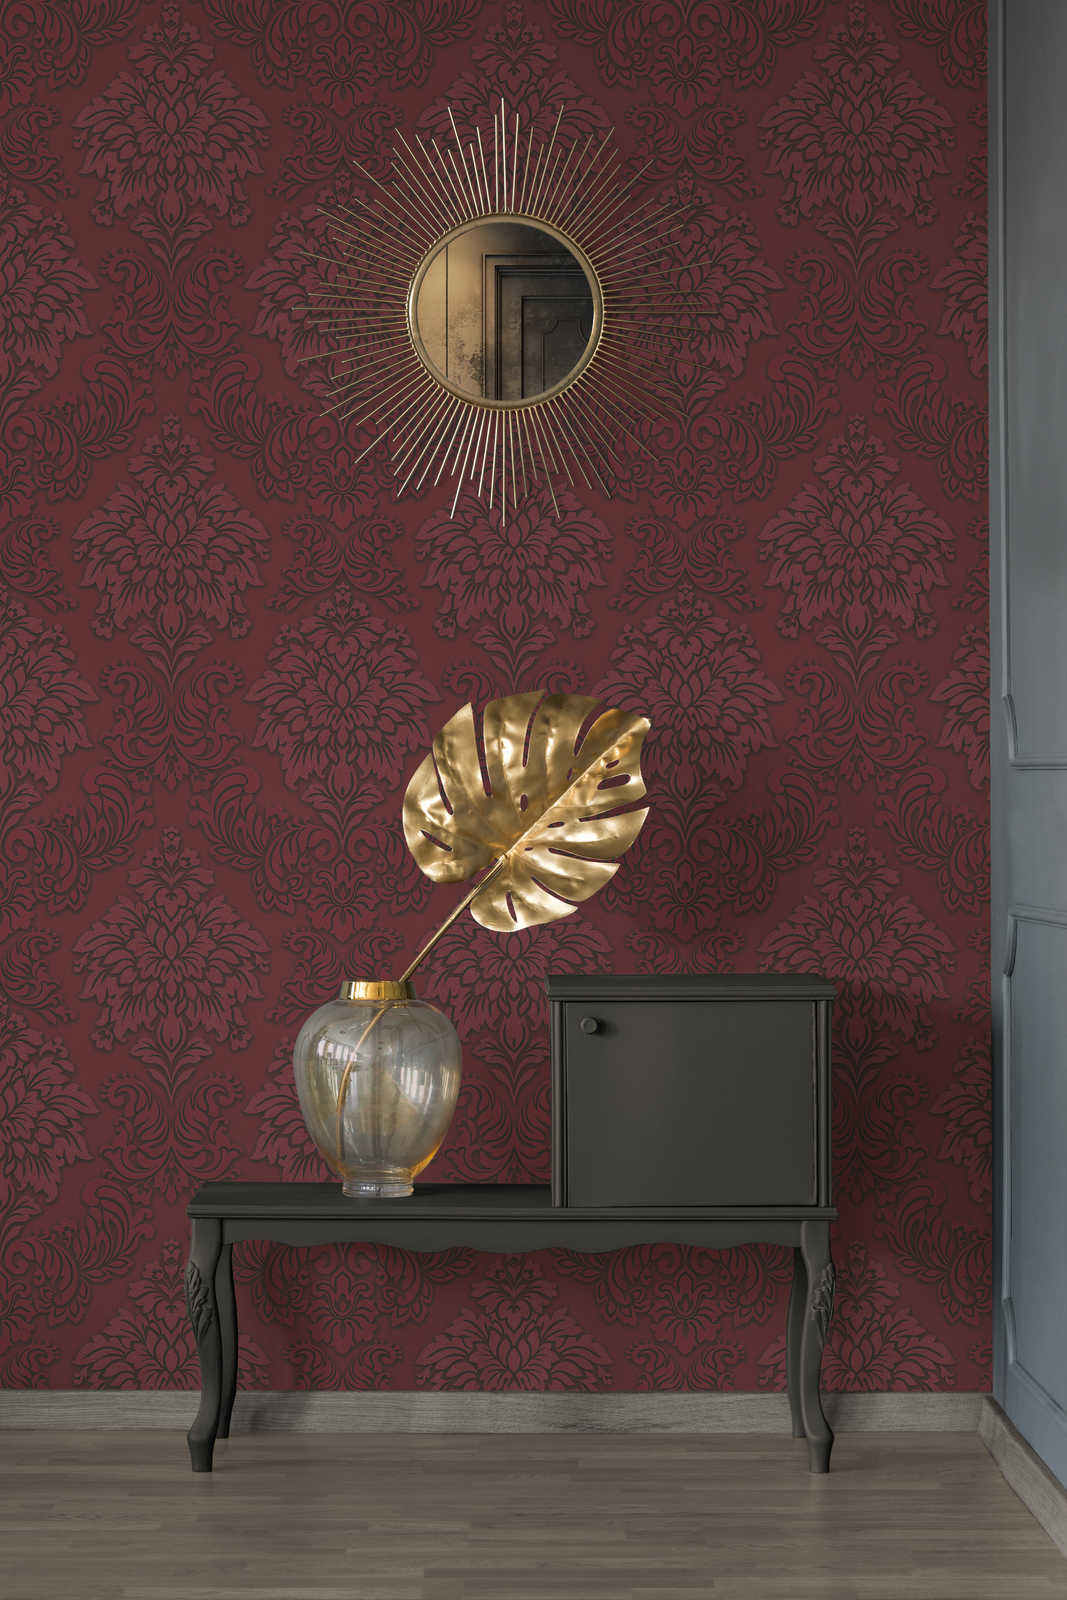             Barok behang ornamenten met glitter effect - rood, zilver, zwart
        